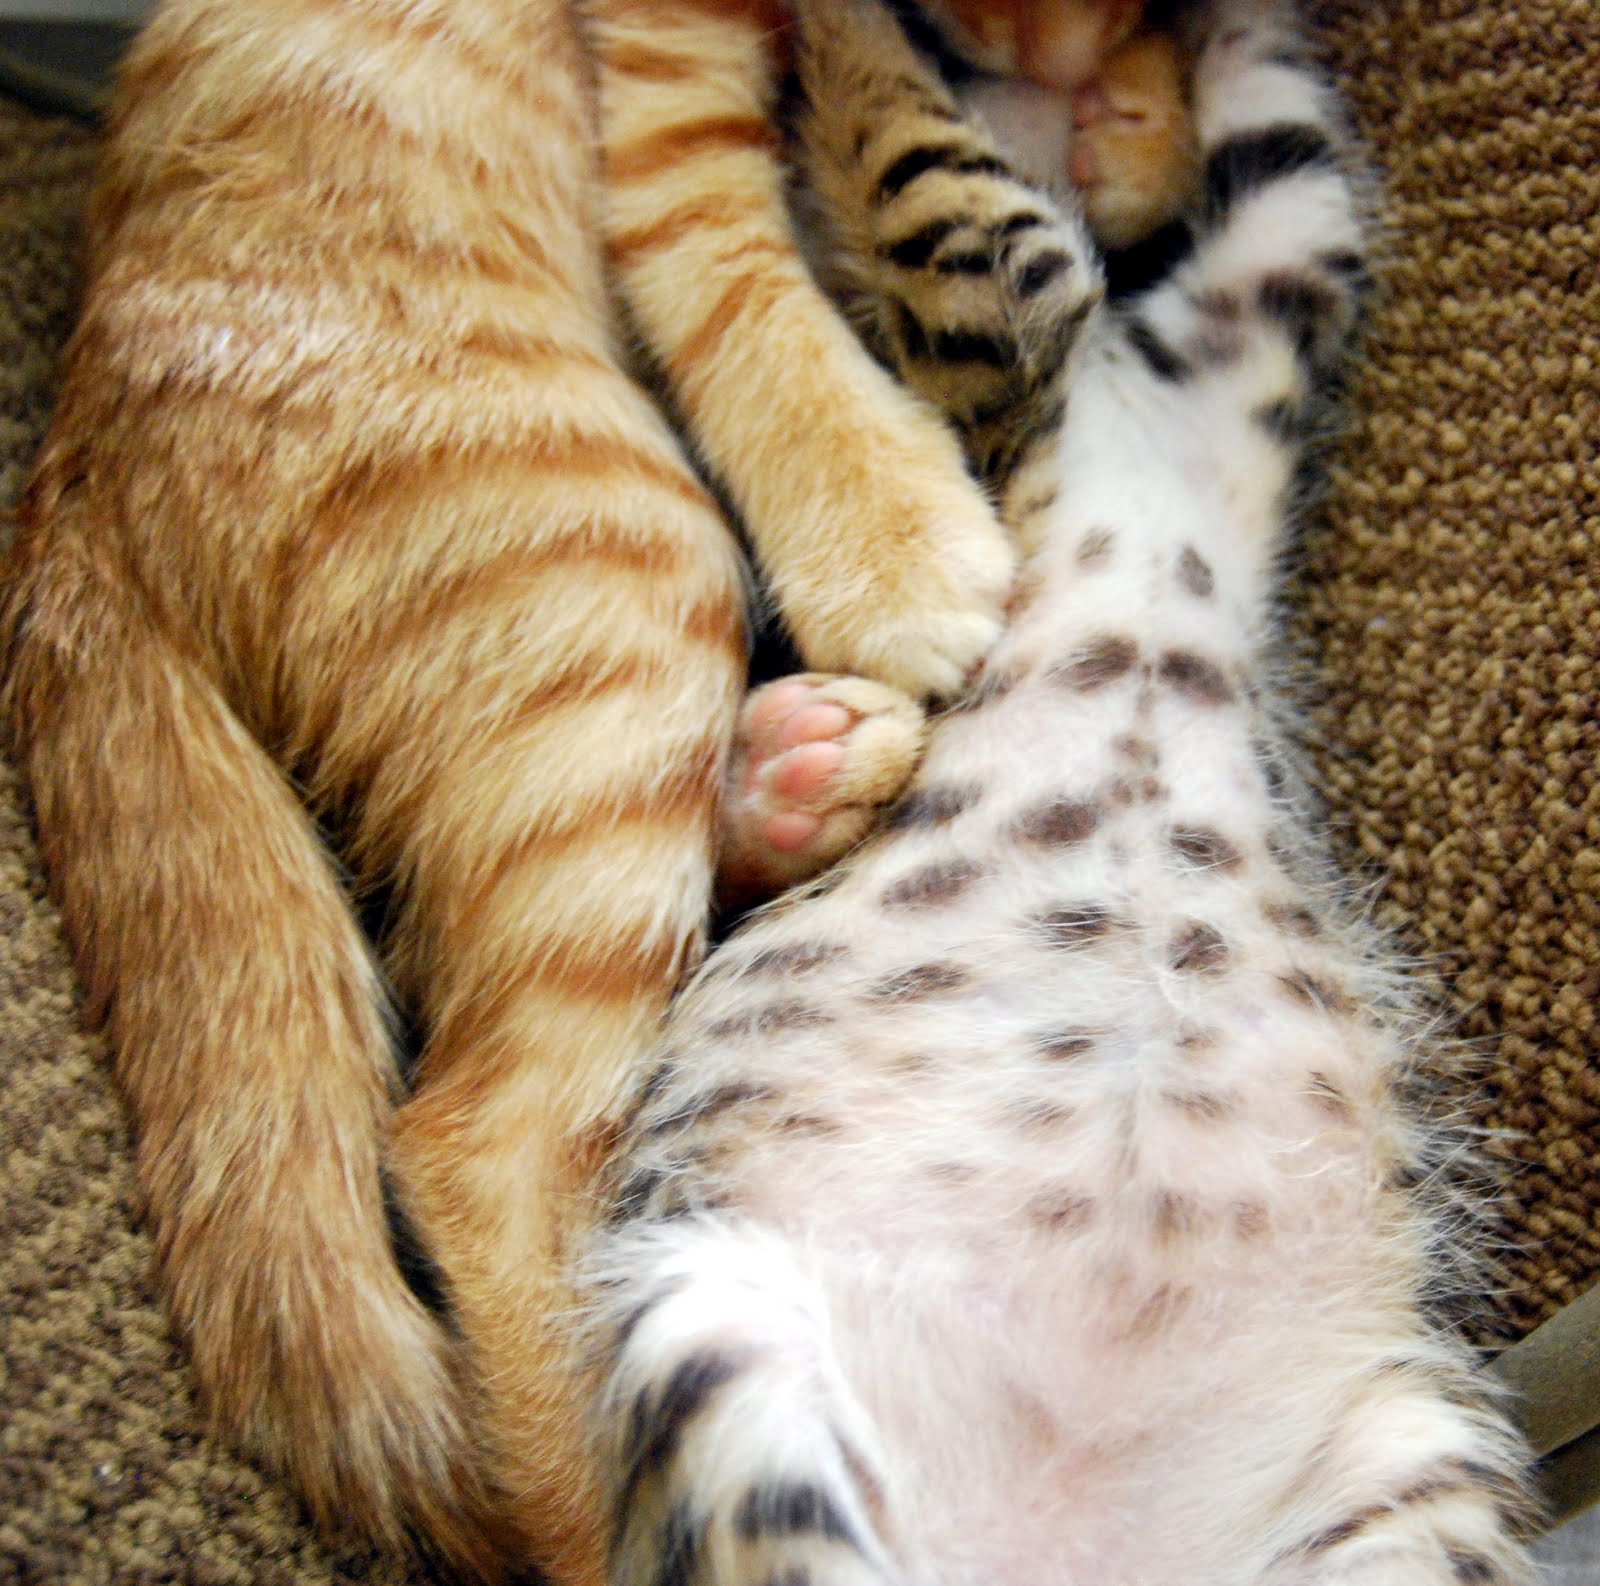 AbbiKat and AlleyKats Kitten Stripes and Spots